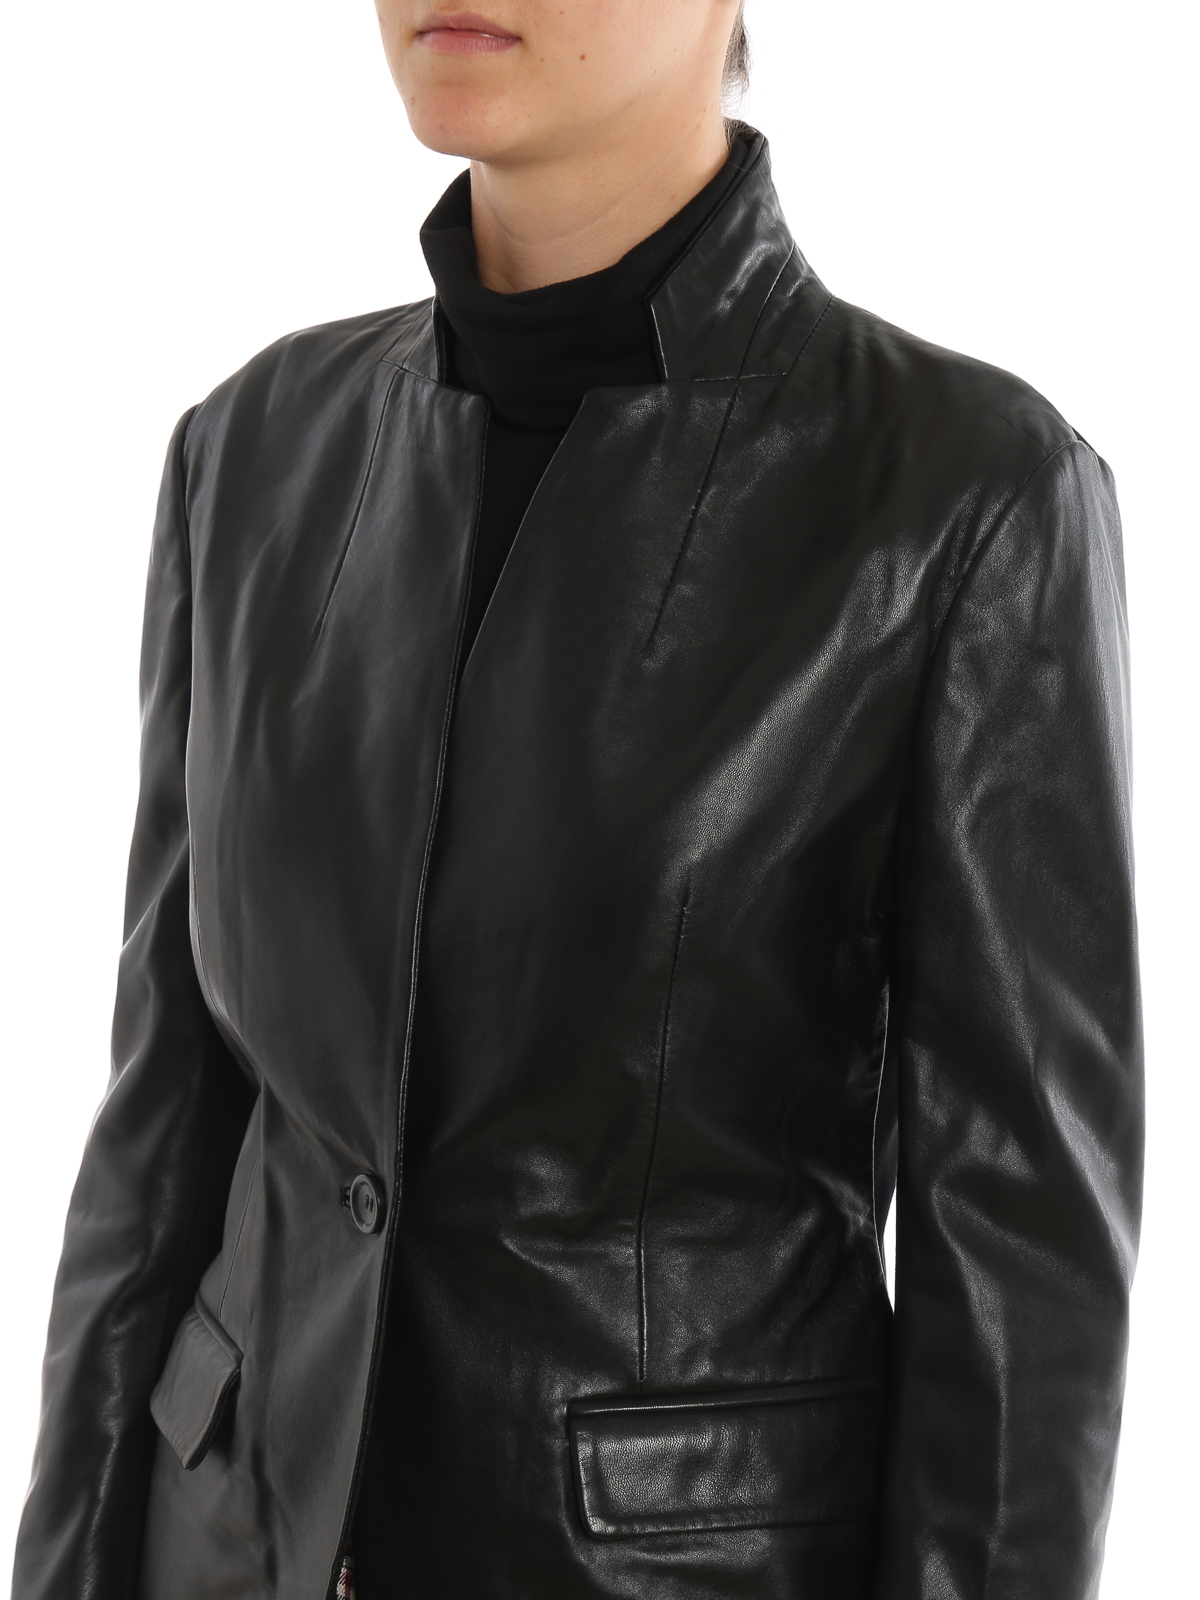 MAZED430758013 jacket Maze - - leather P.A.R.O.S.H. jacket Leather